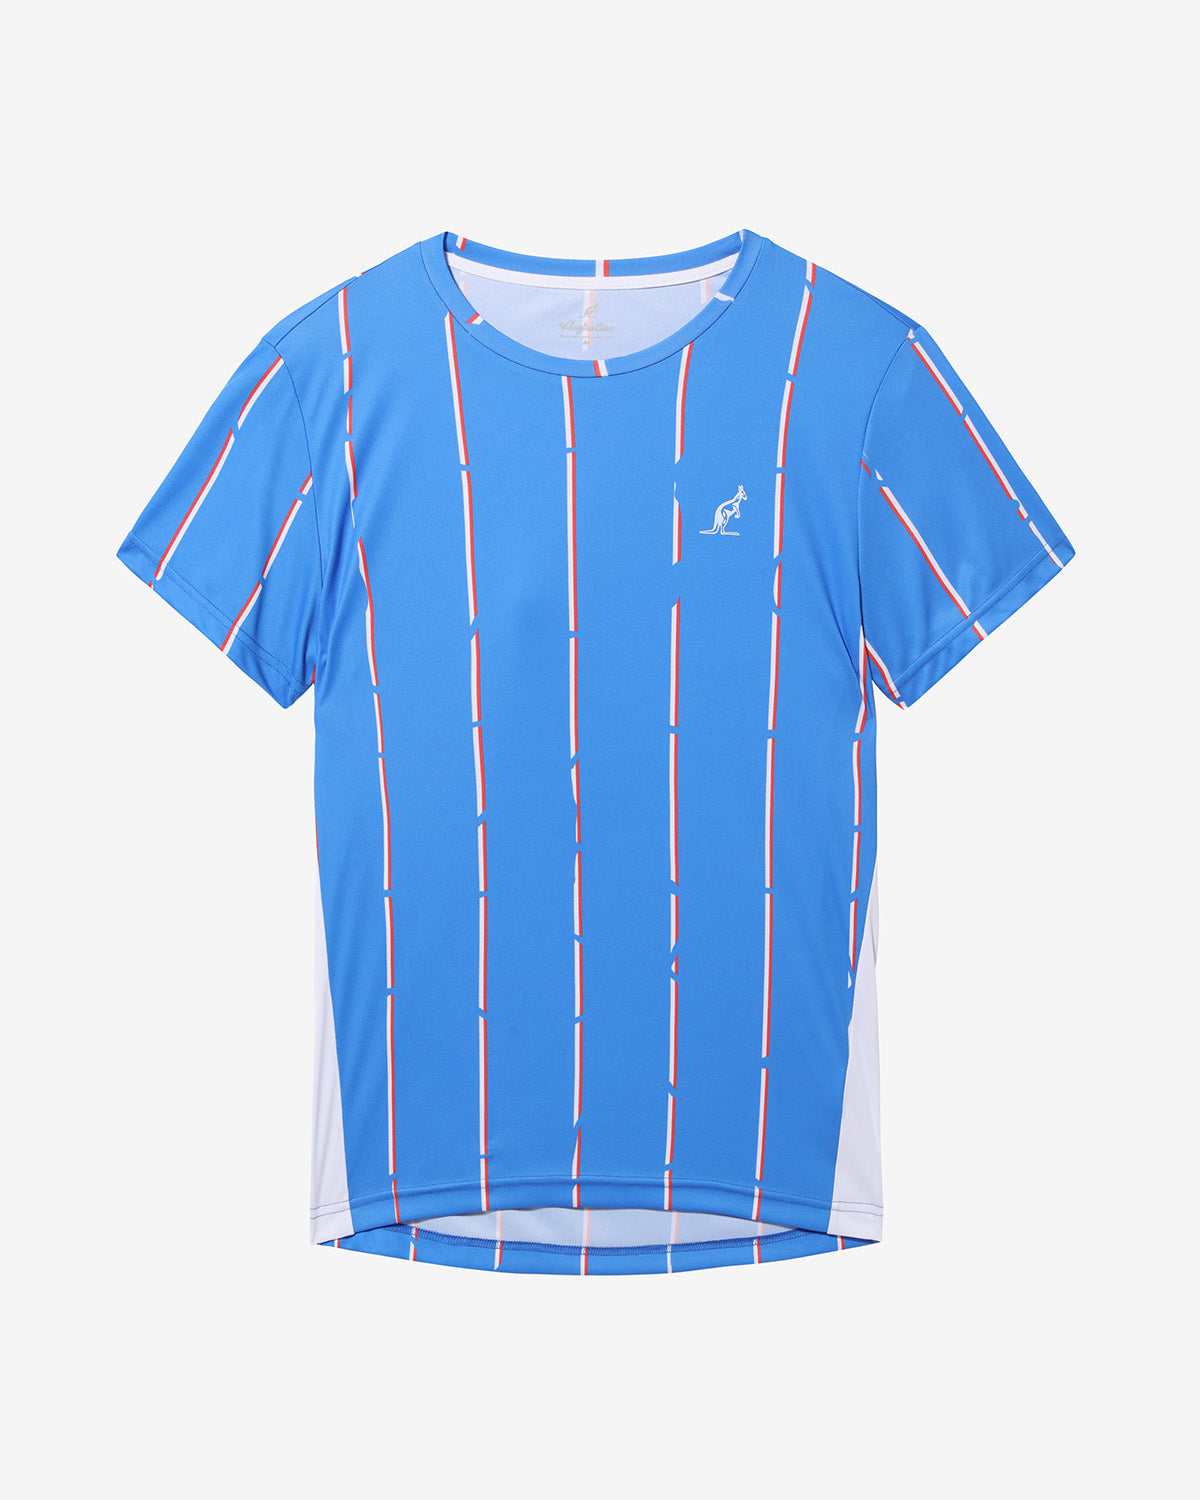 Stripe T-shirt: Australian Tennis